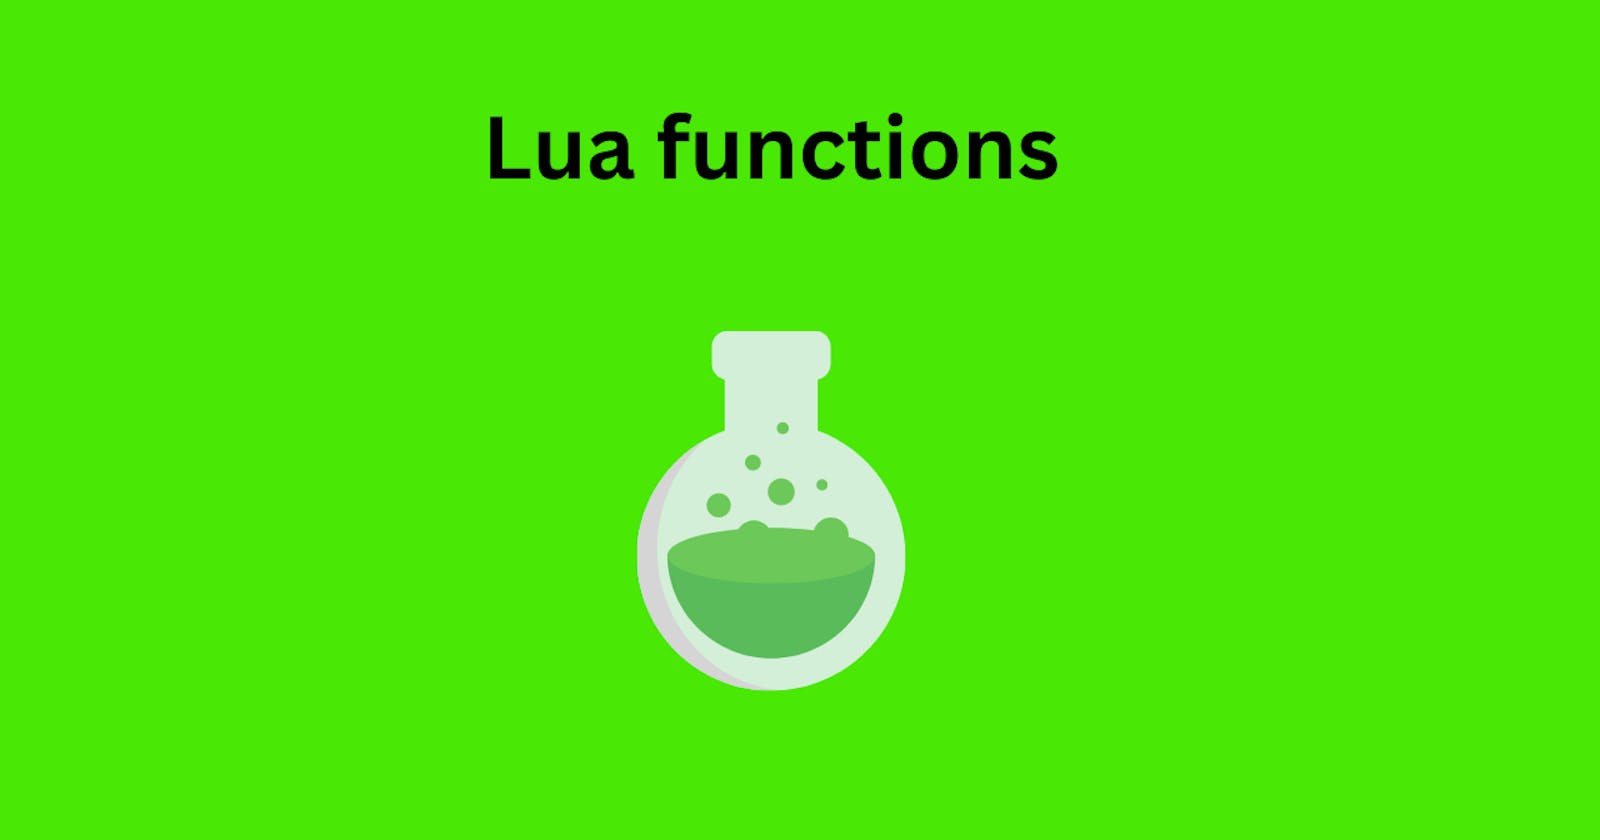 Lua functions